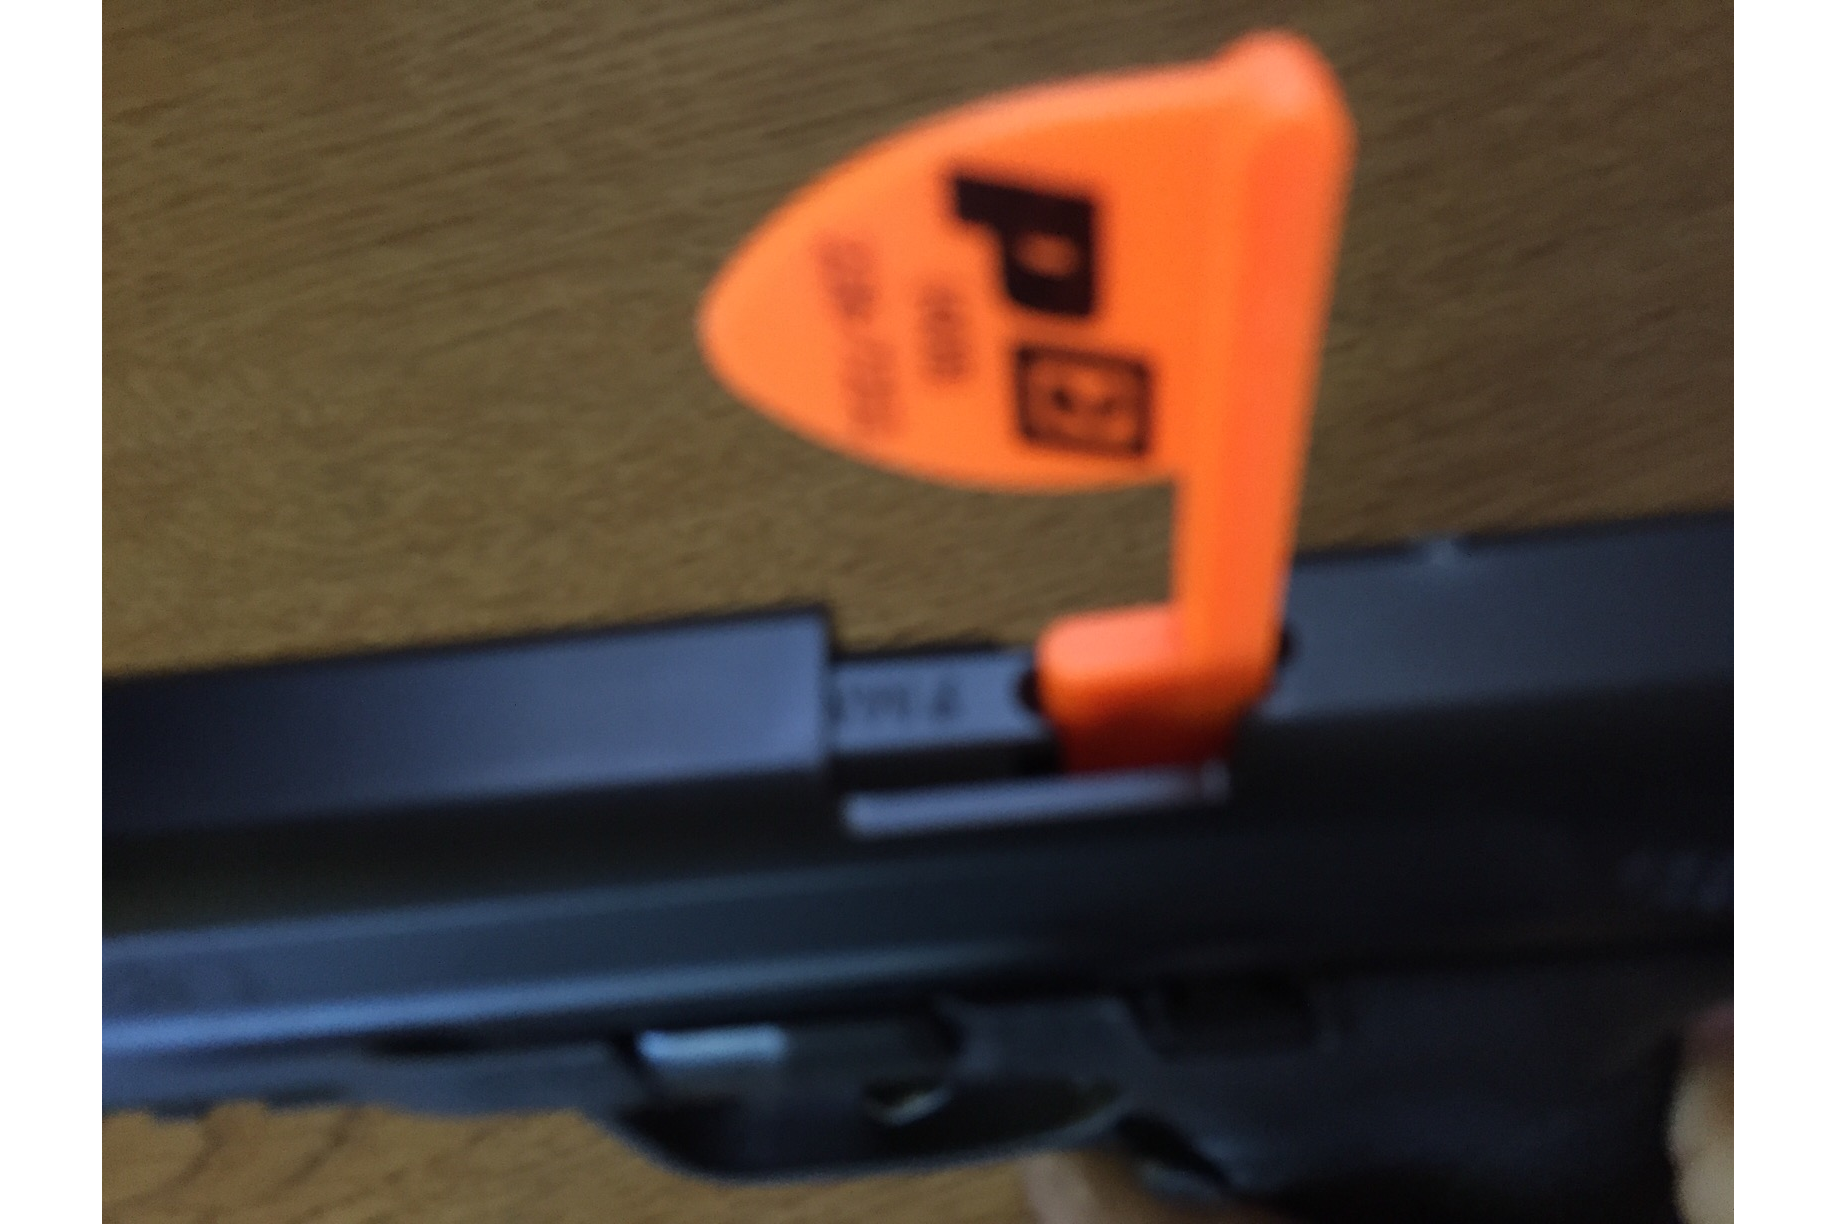 OBI-YELLOW Empty Chamber Safe Chamber Flags Rifle Pistol Range Safety  ORANGE 